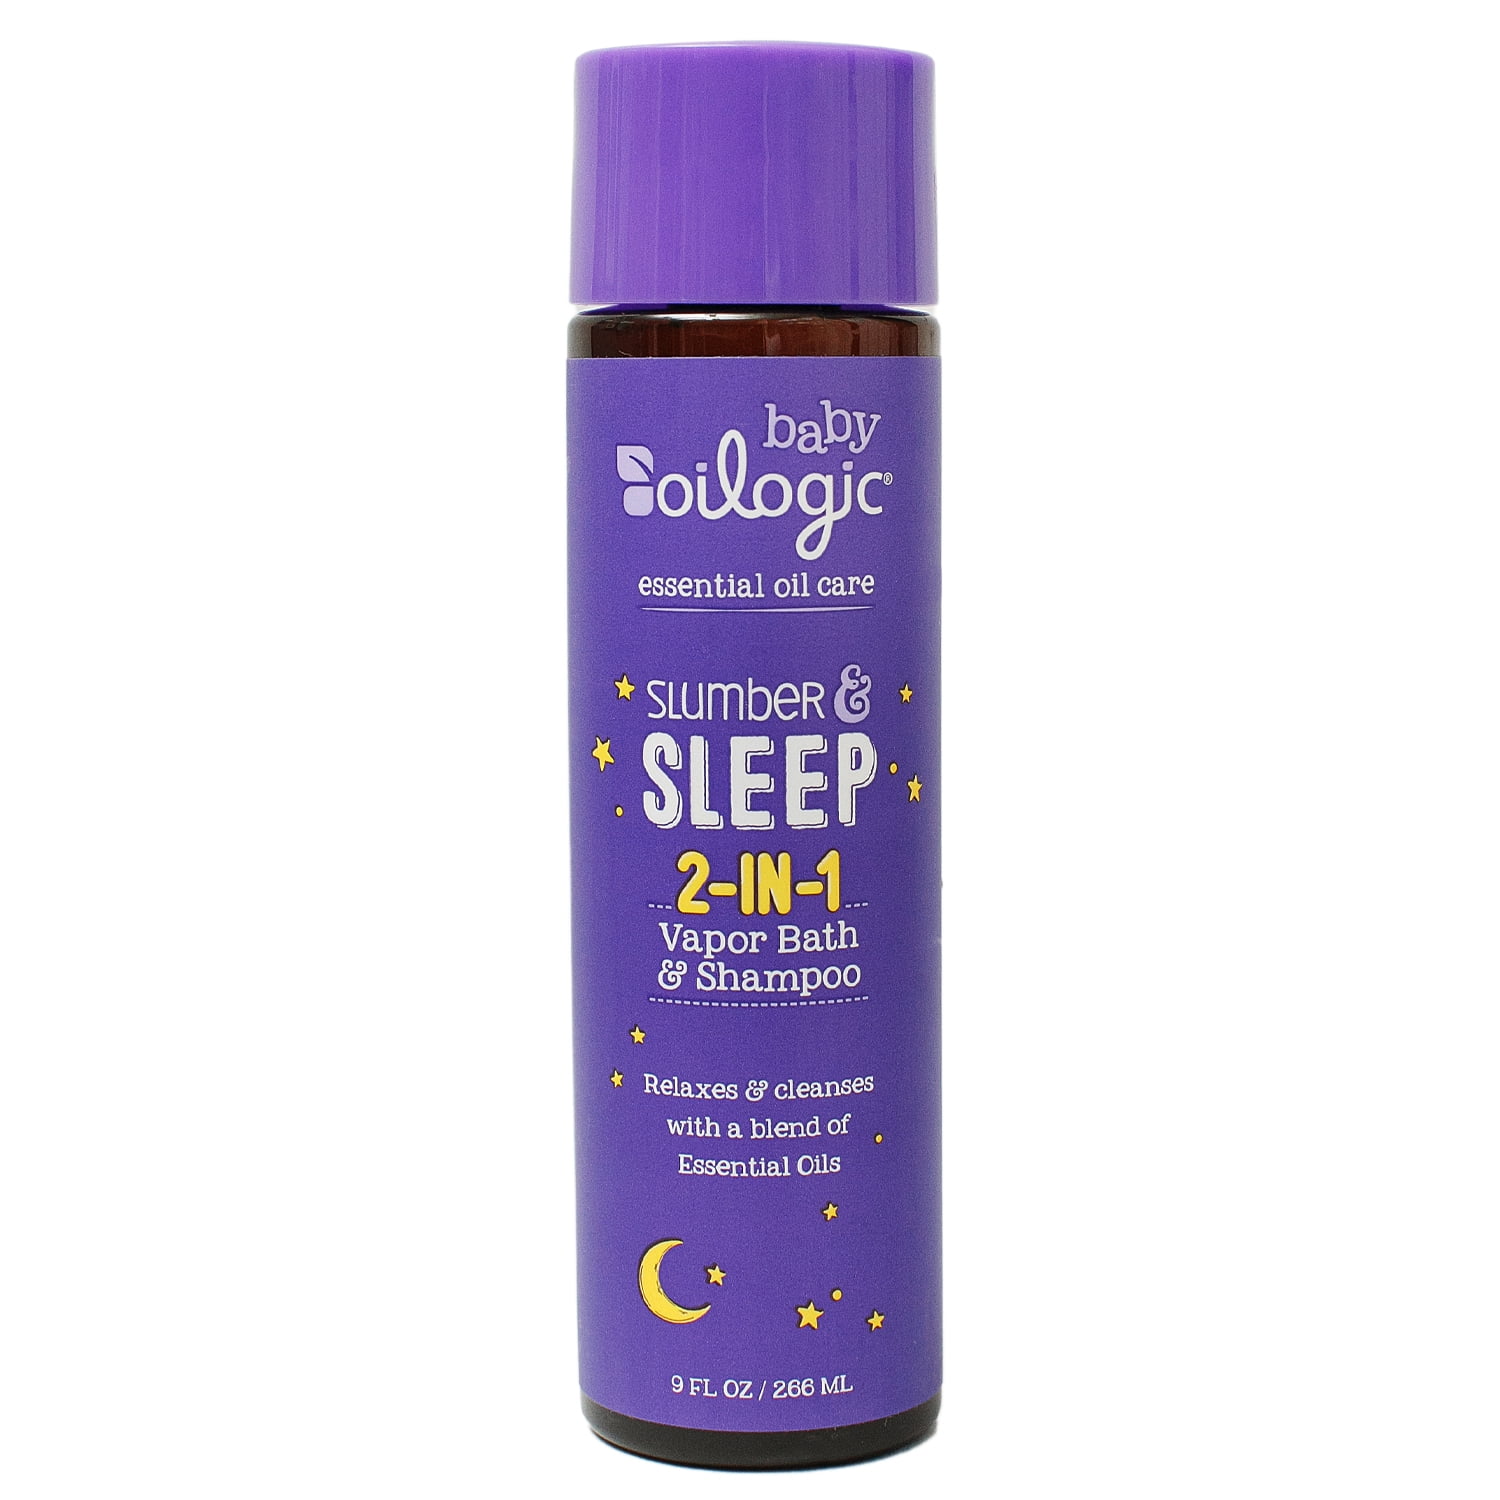 Oilogic Slumber & Sleep Baby Safe Essential Oil Vapor Bath & Shampoo, 9 fl oz